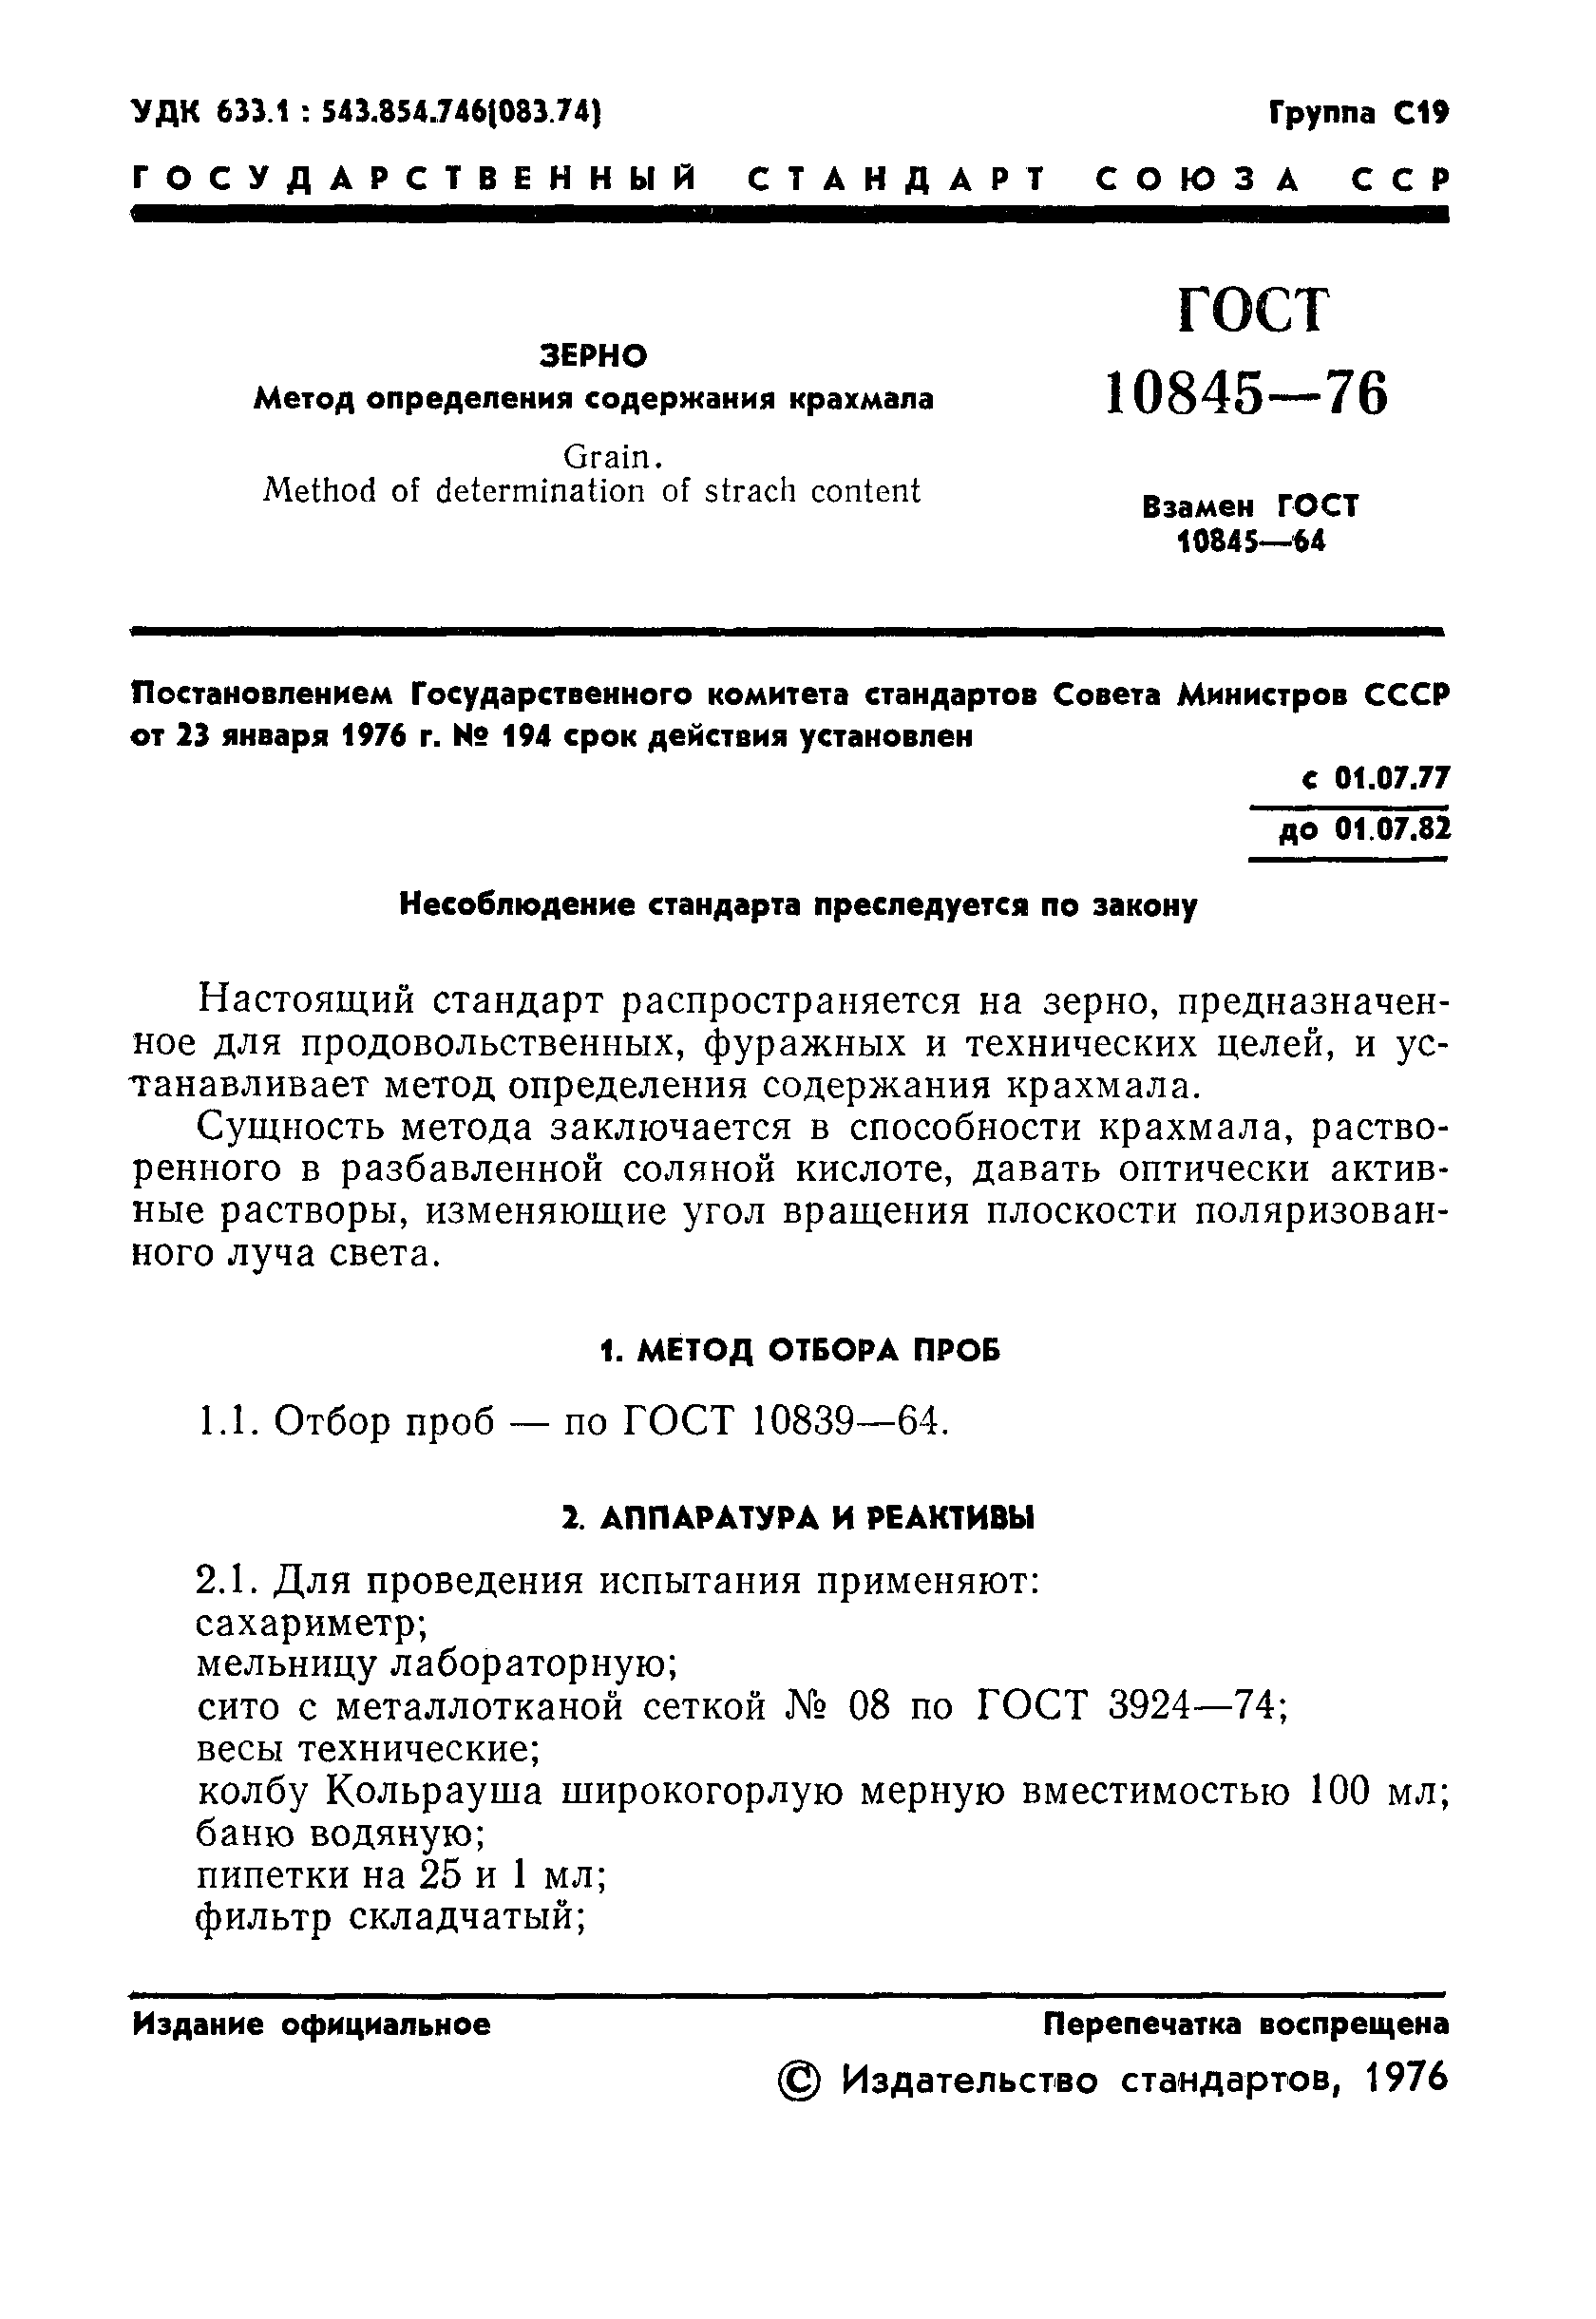 ГОСТ 10845-76